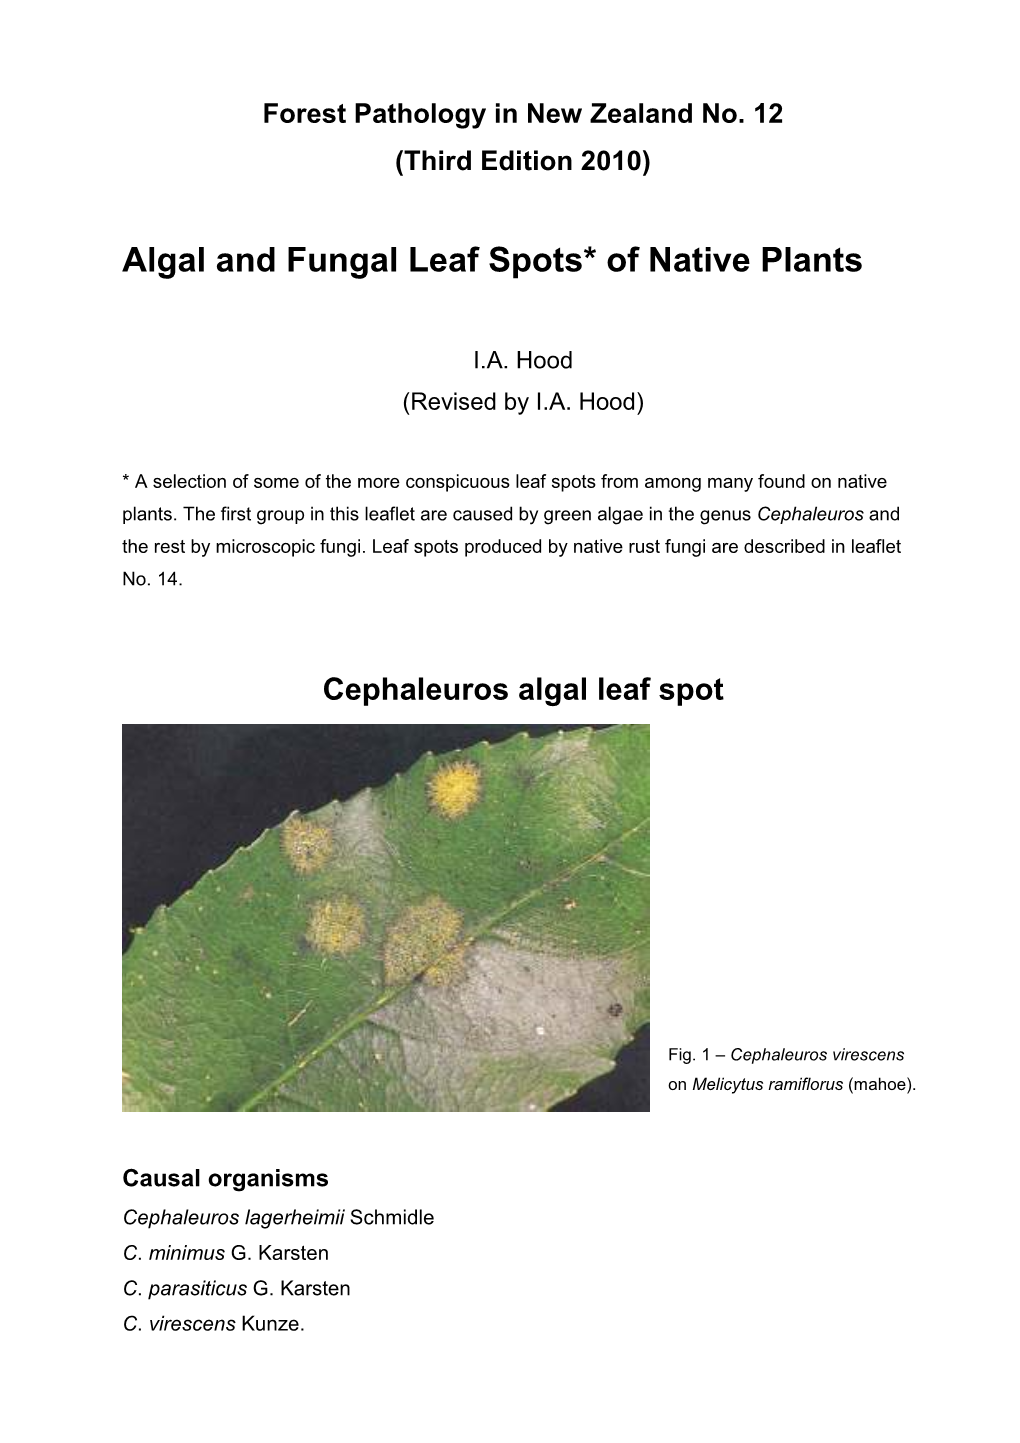 Algal and Fungal Leaf Spots* of Native Plants